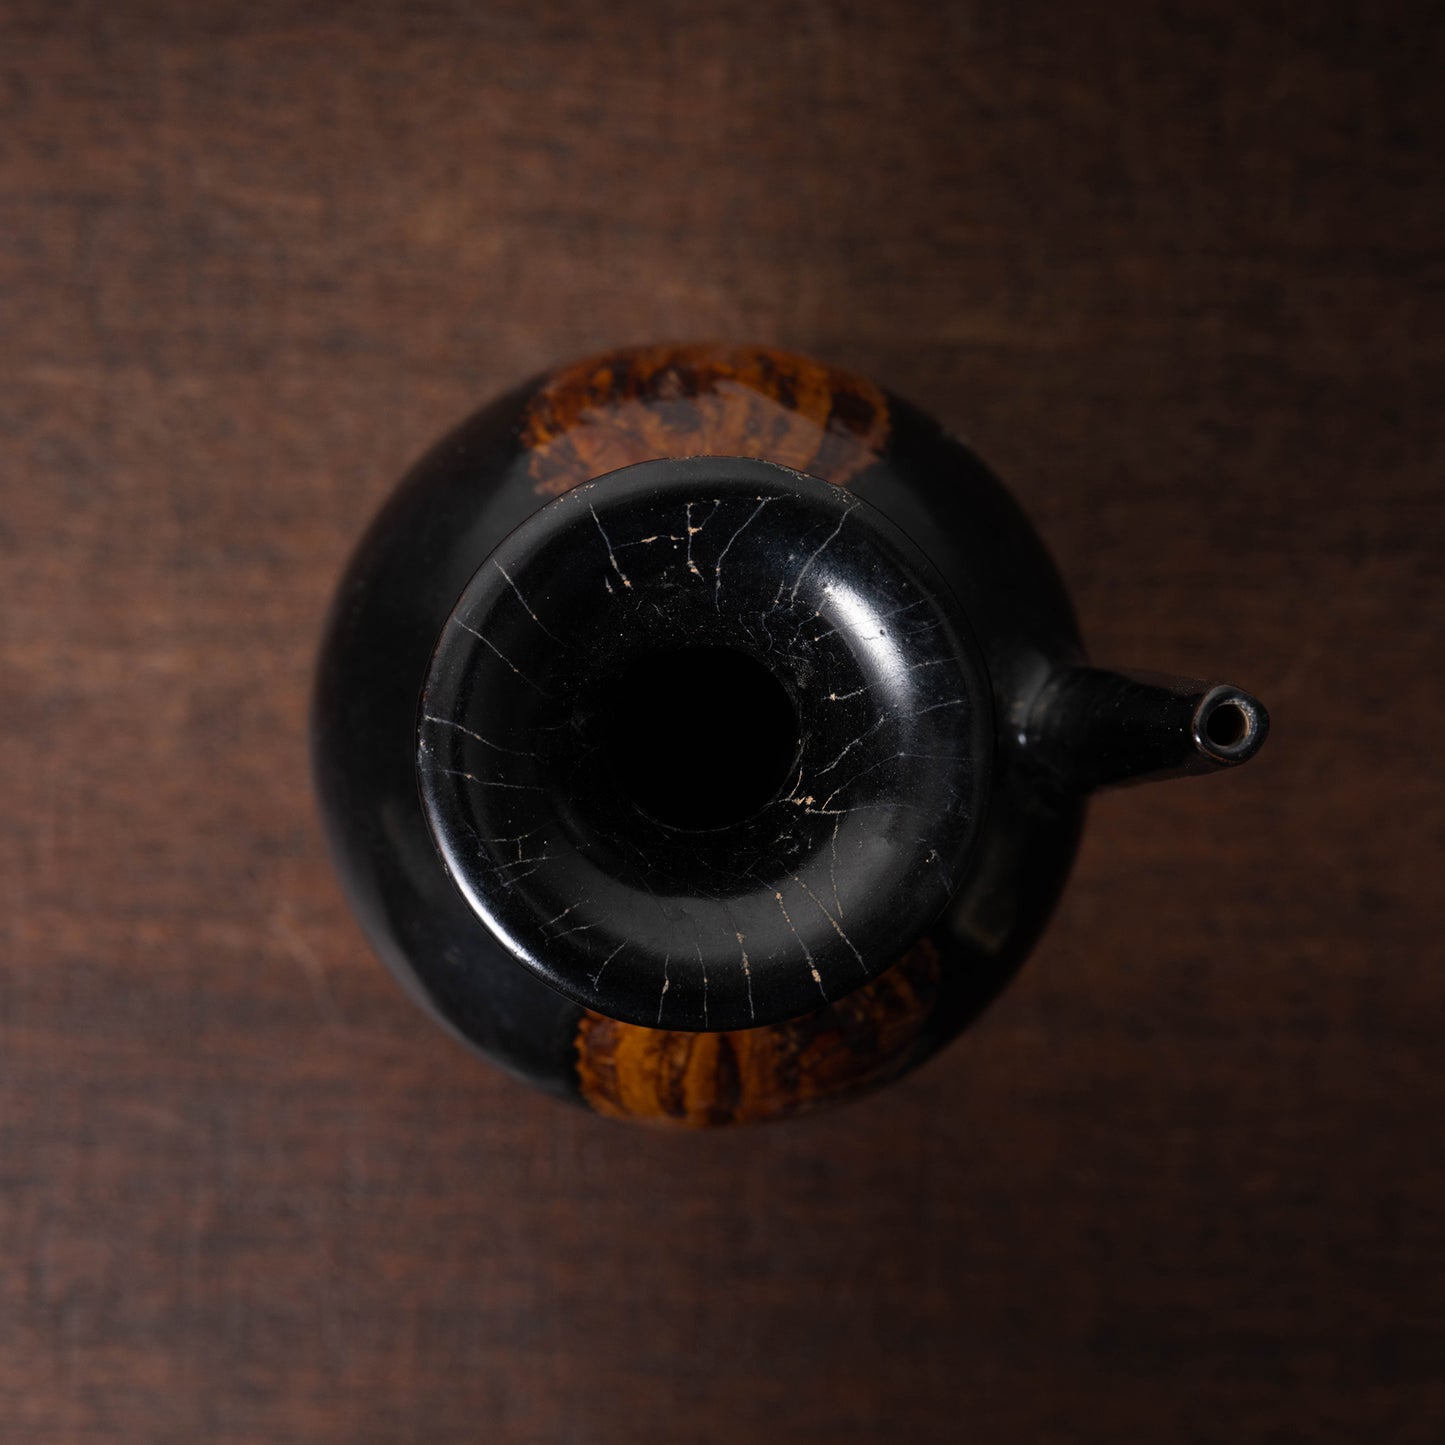 Southern Song Dynasty Chizou ware Black Glaze Bottle with Leaf Design